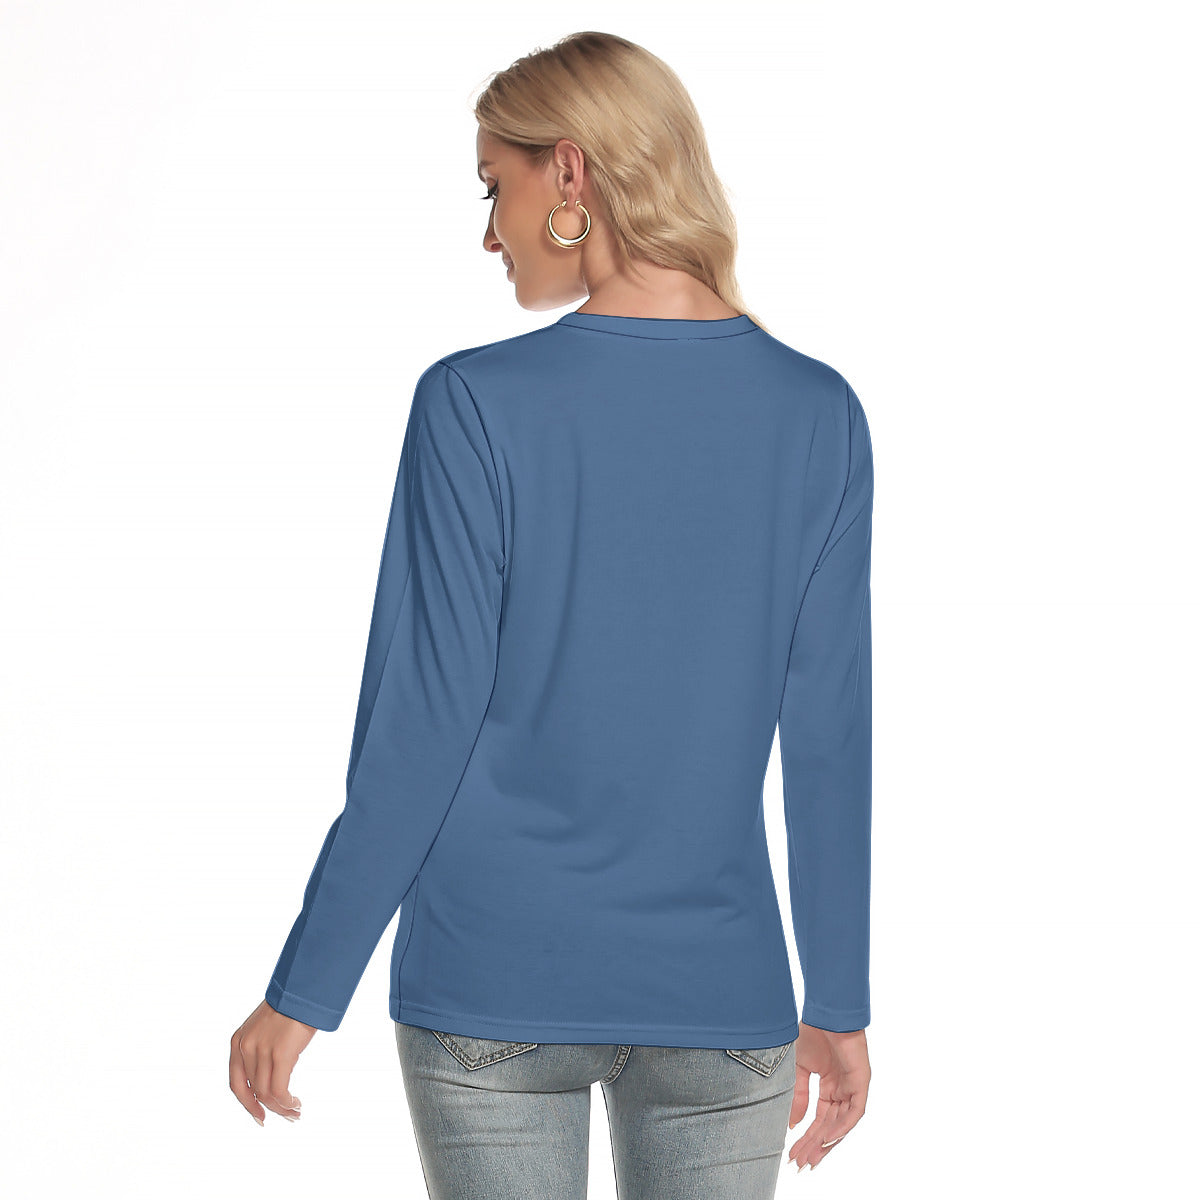 Fantasy 169 -- Women's O-neck Long Sleeve T-shirt